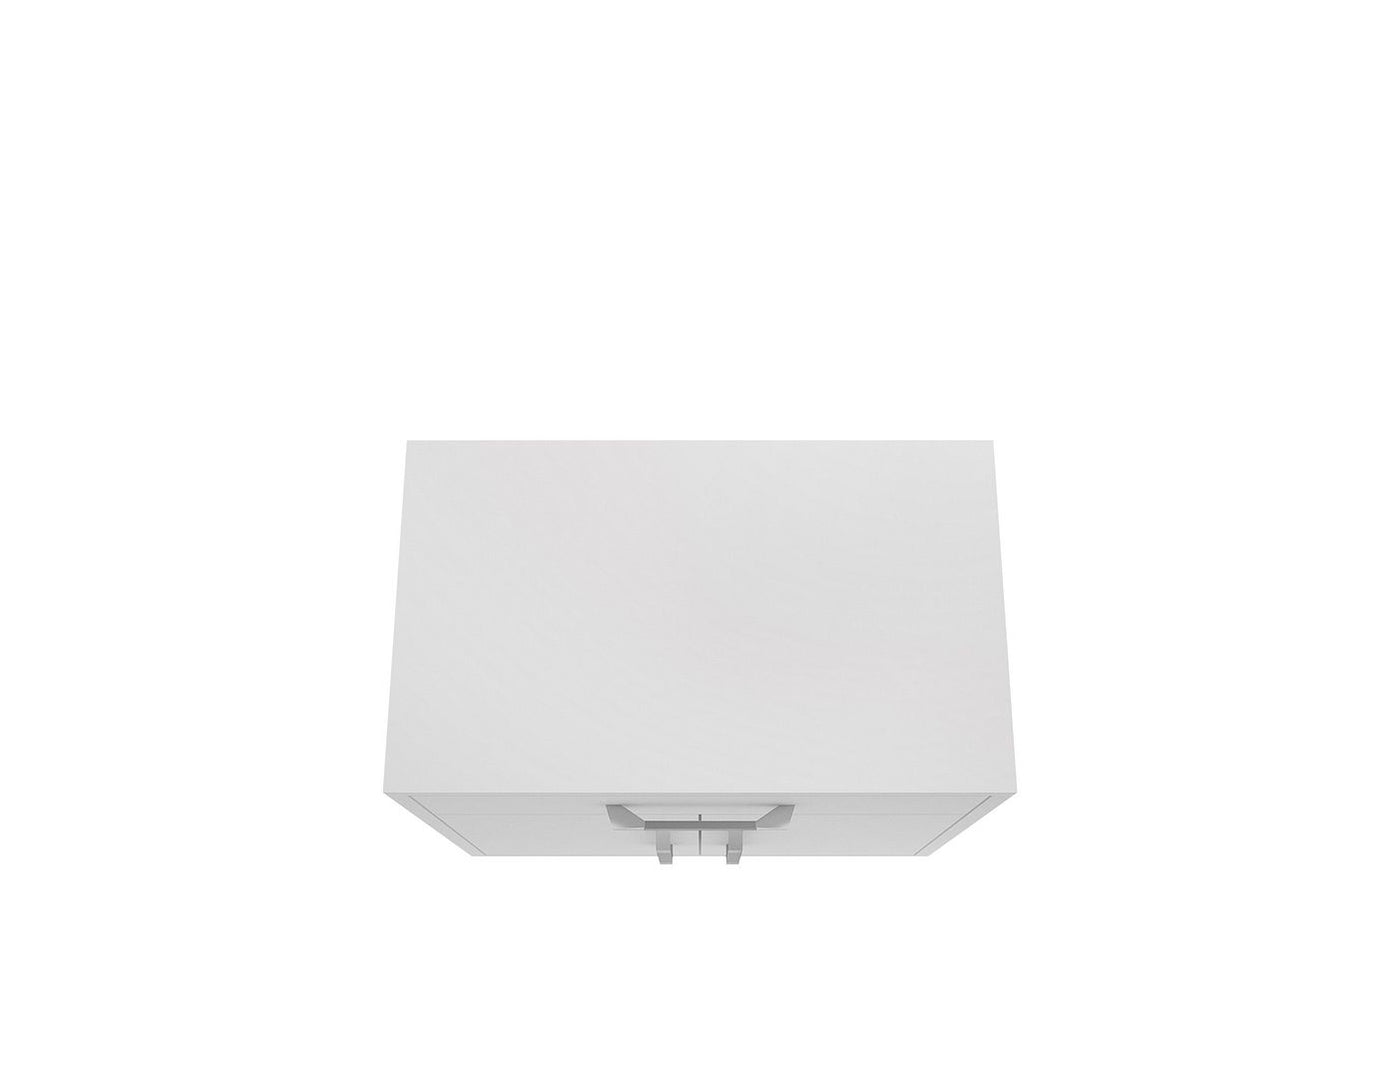 Lunde Mobile Garage Cabinet - White - Set of 2